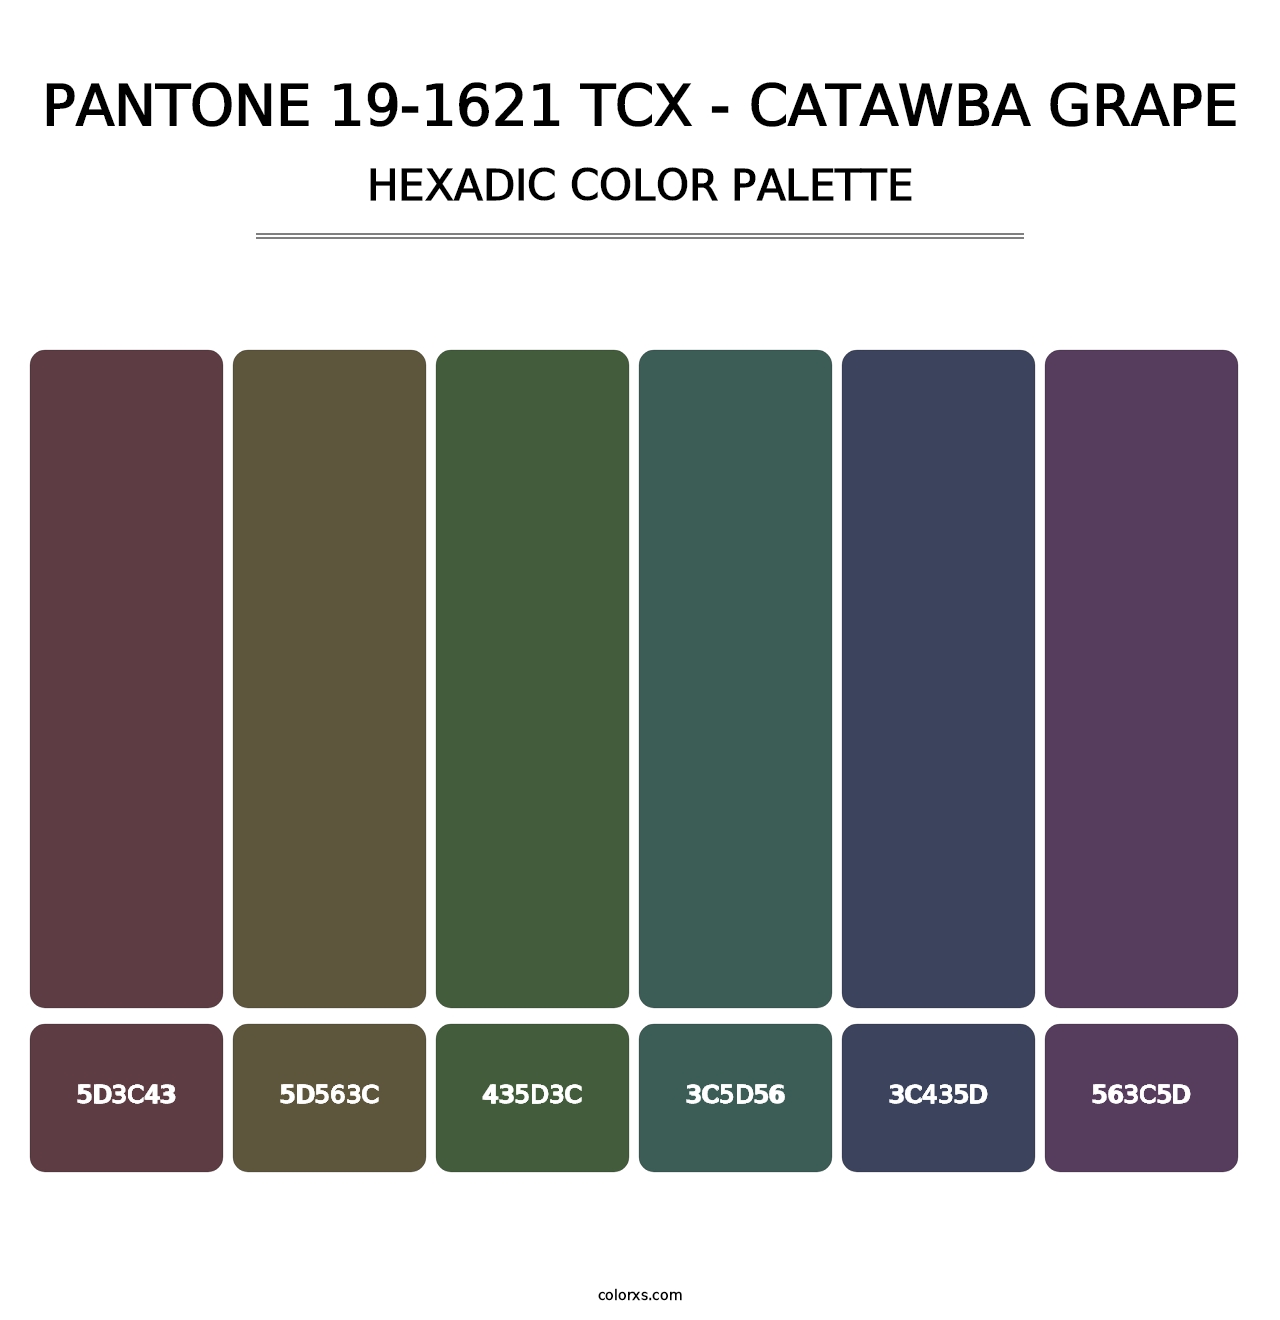 PANTONE 19-1621 TCX - Catawba Grape - Hexadic Color Palette